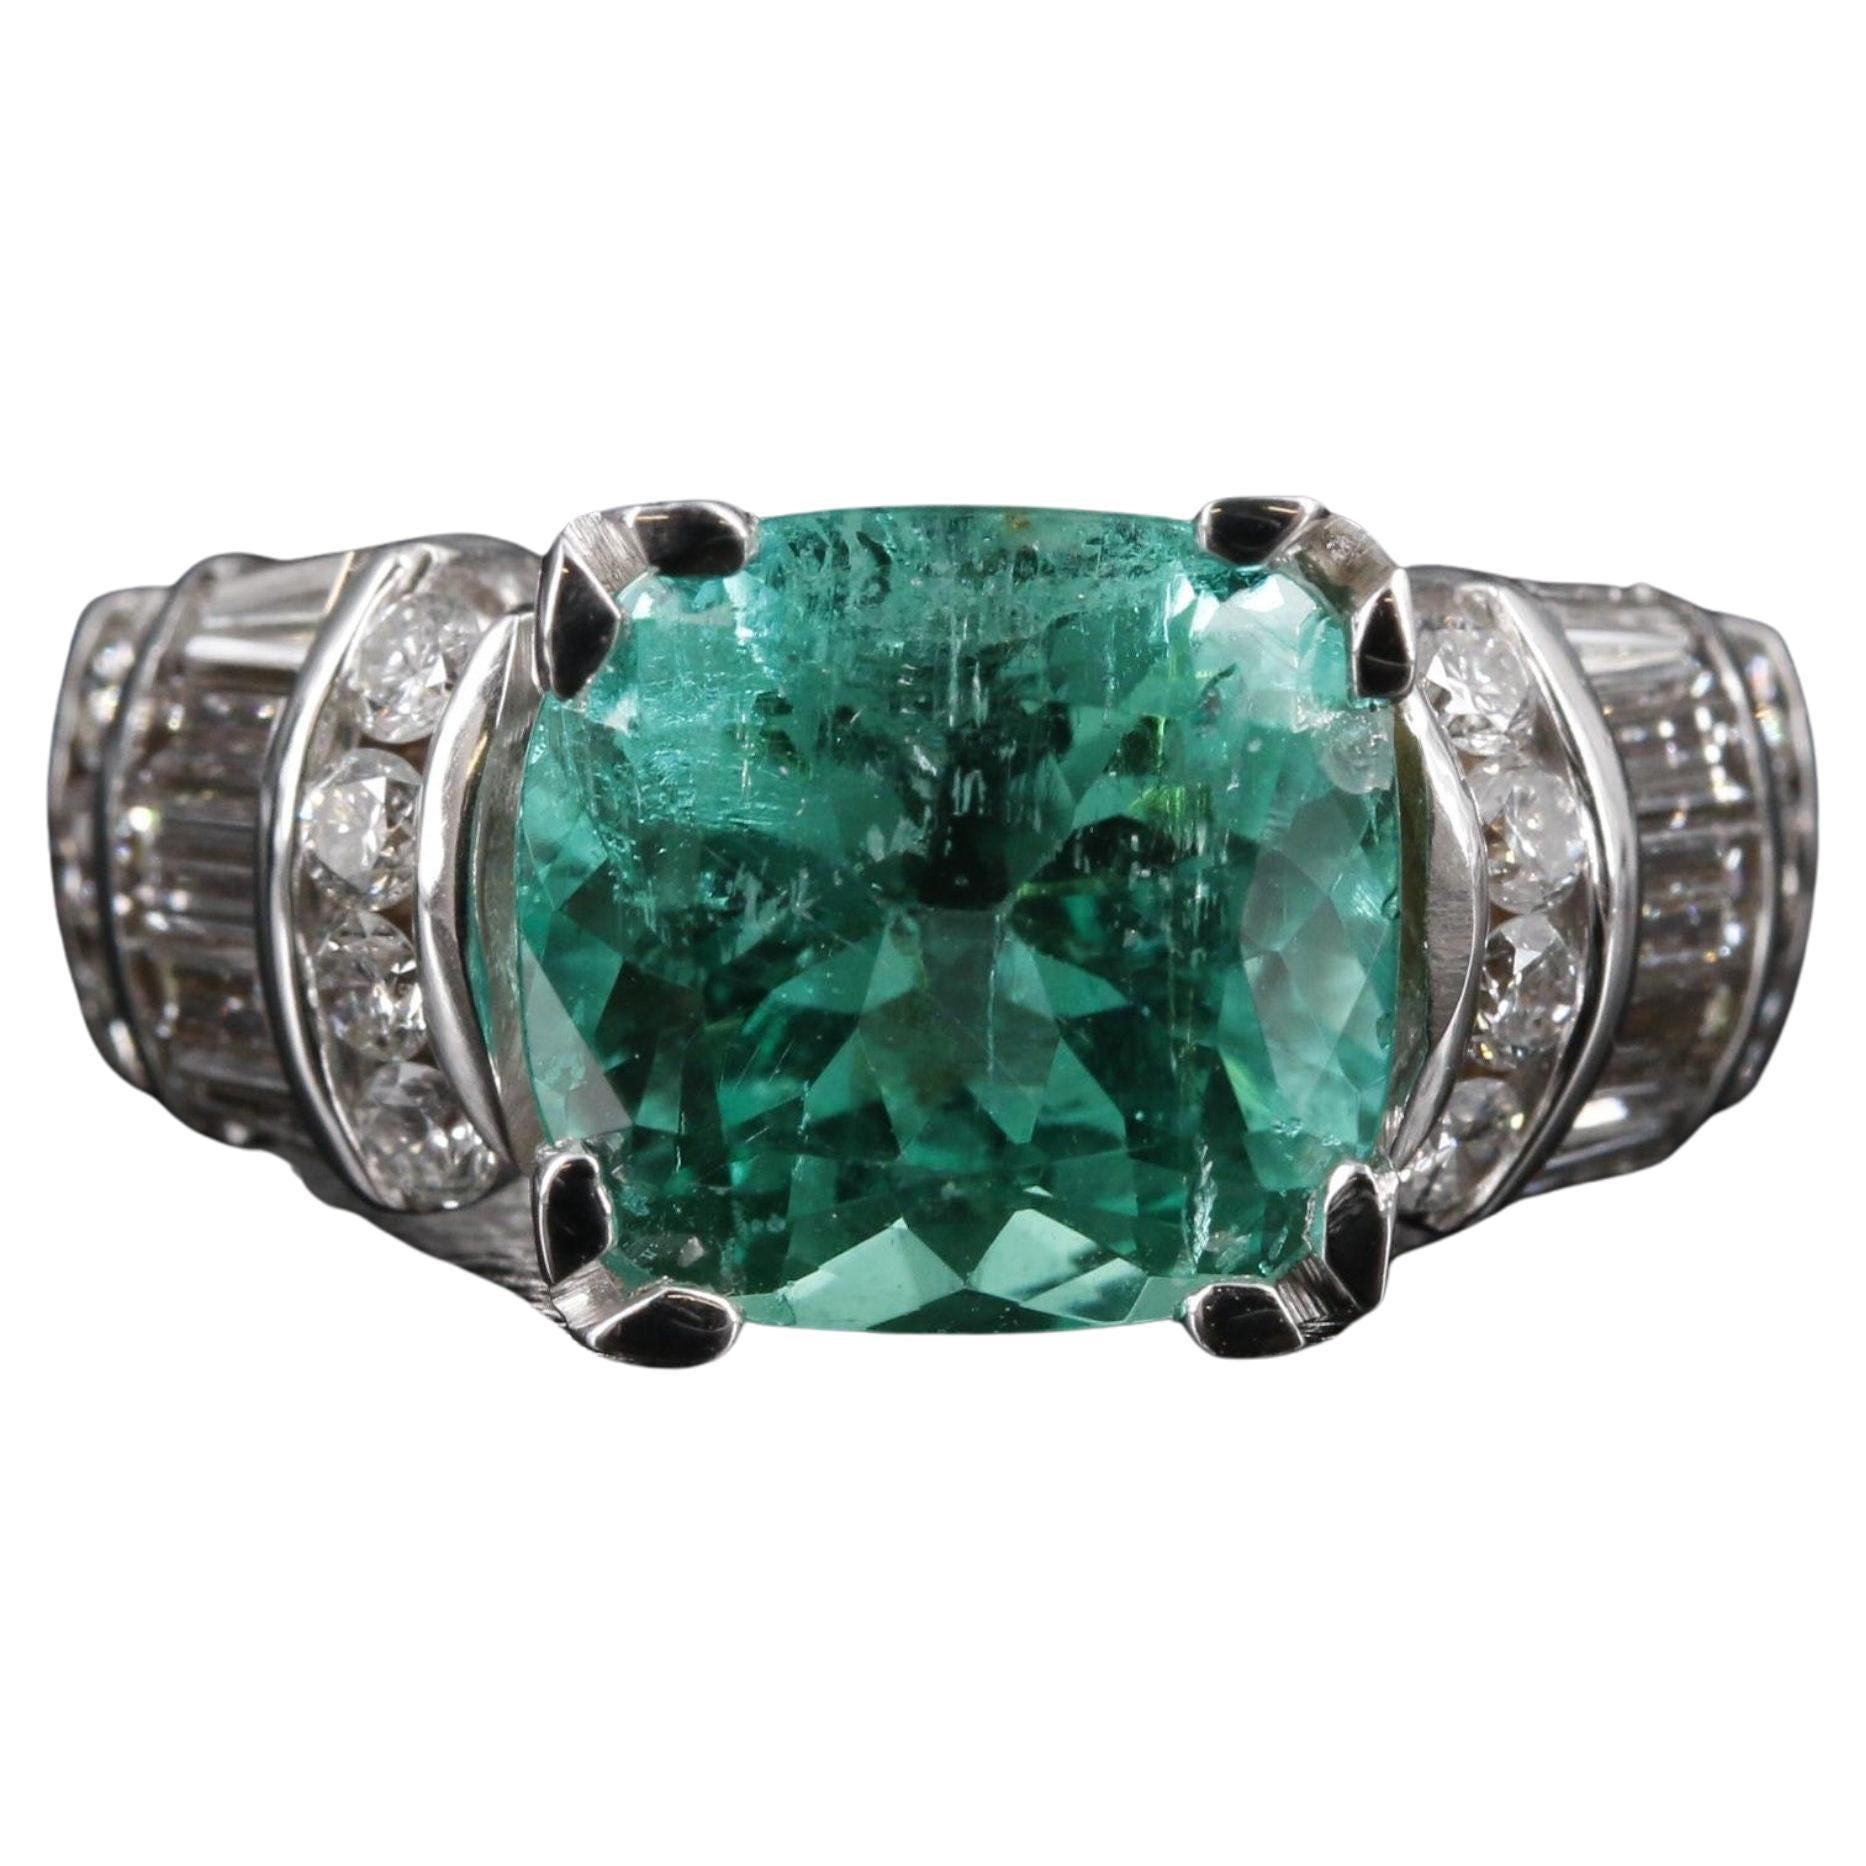 For Sale:  4.7 Carat Bluish Green Emerald Diamond Engagement Ring, Diamond Cocktail Ring